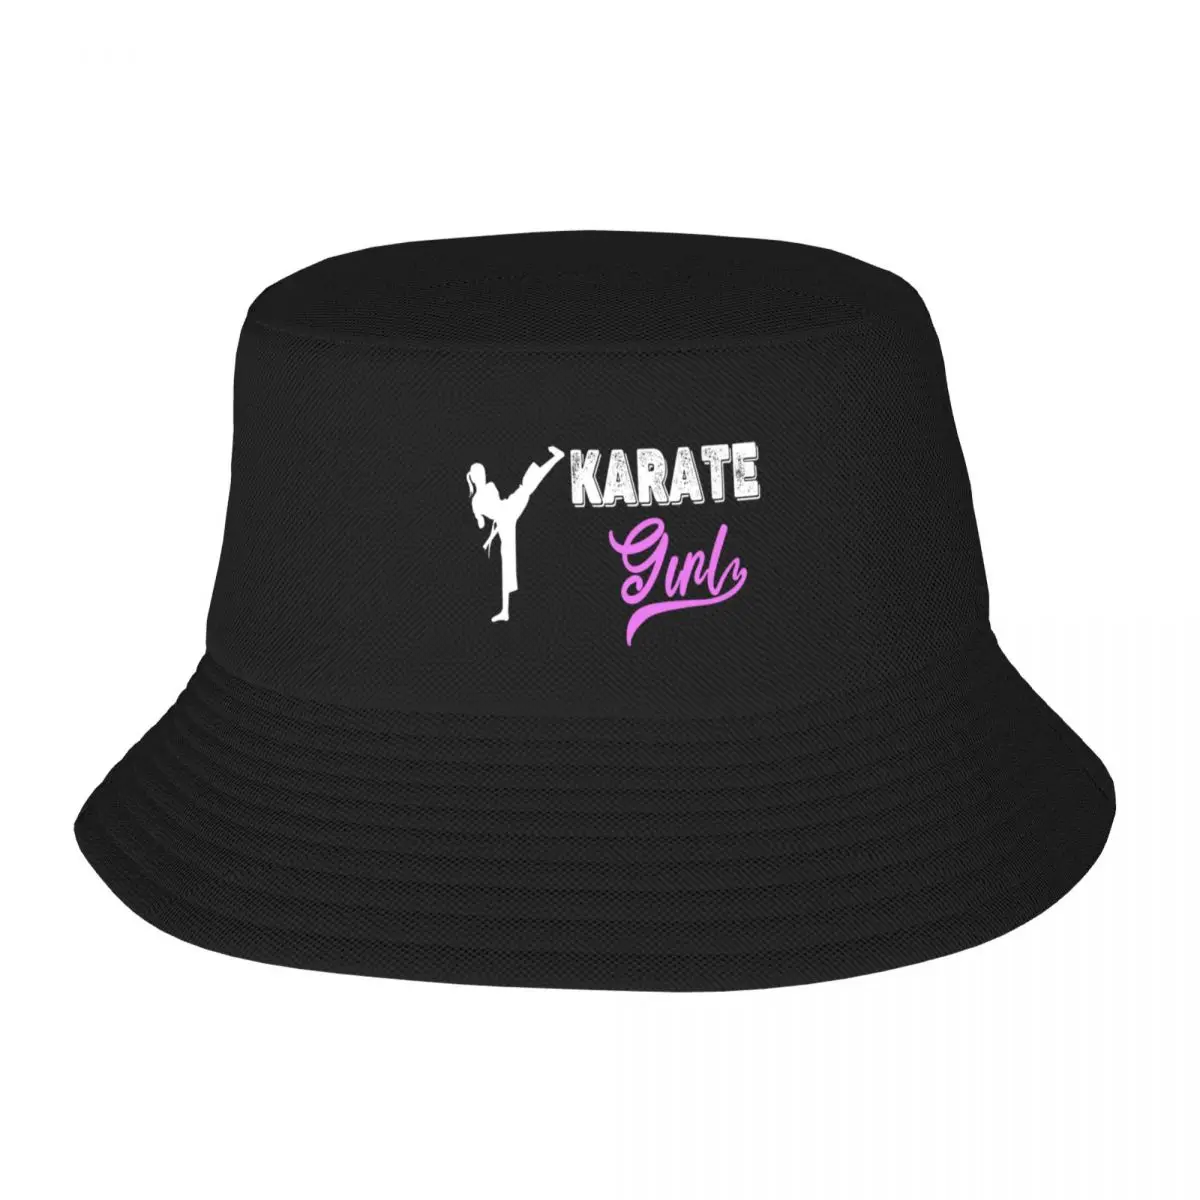 

Karate Girl Fisherman's Hat, Adult Cap Fashionable Unisex No deformation Nice Gift